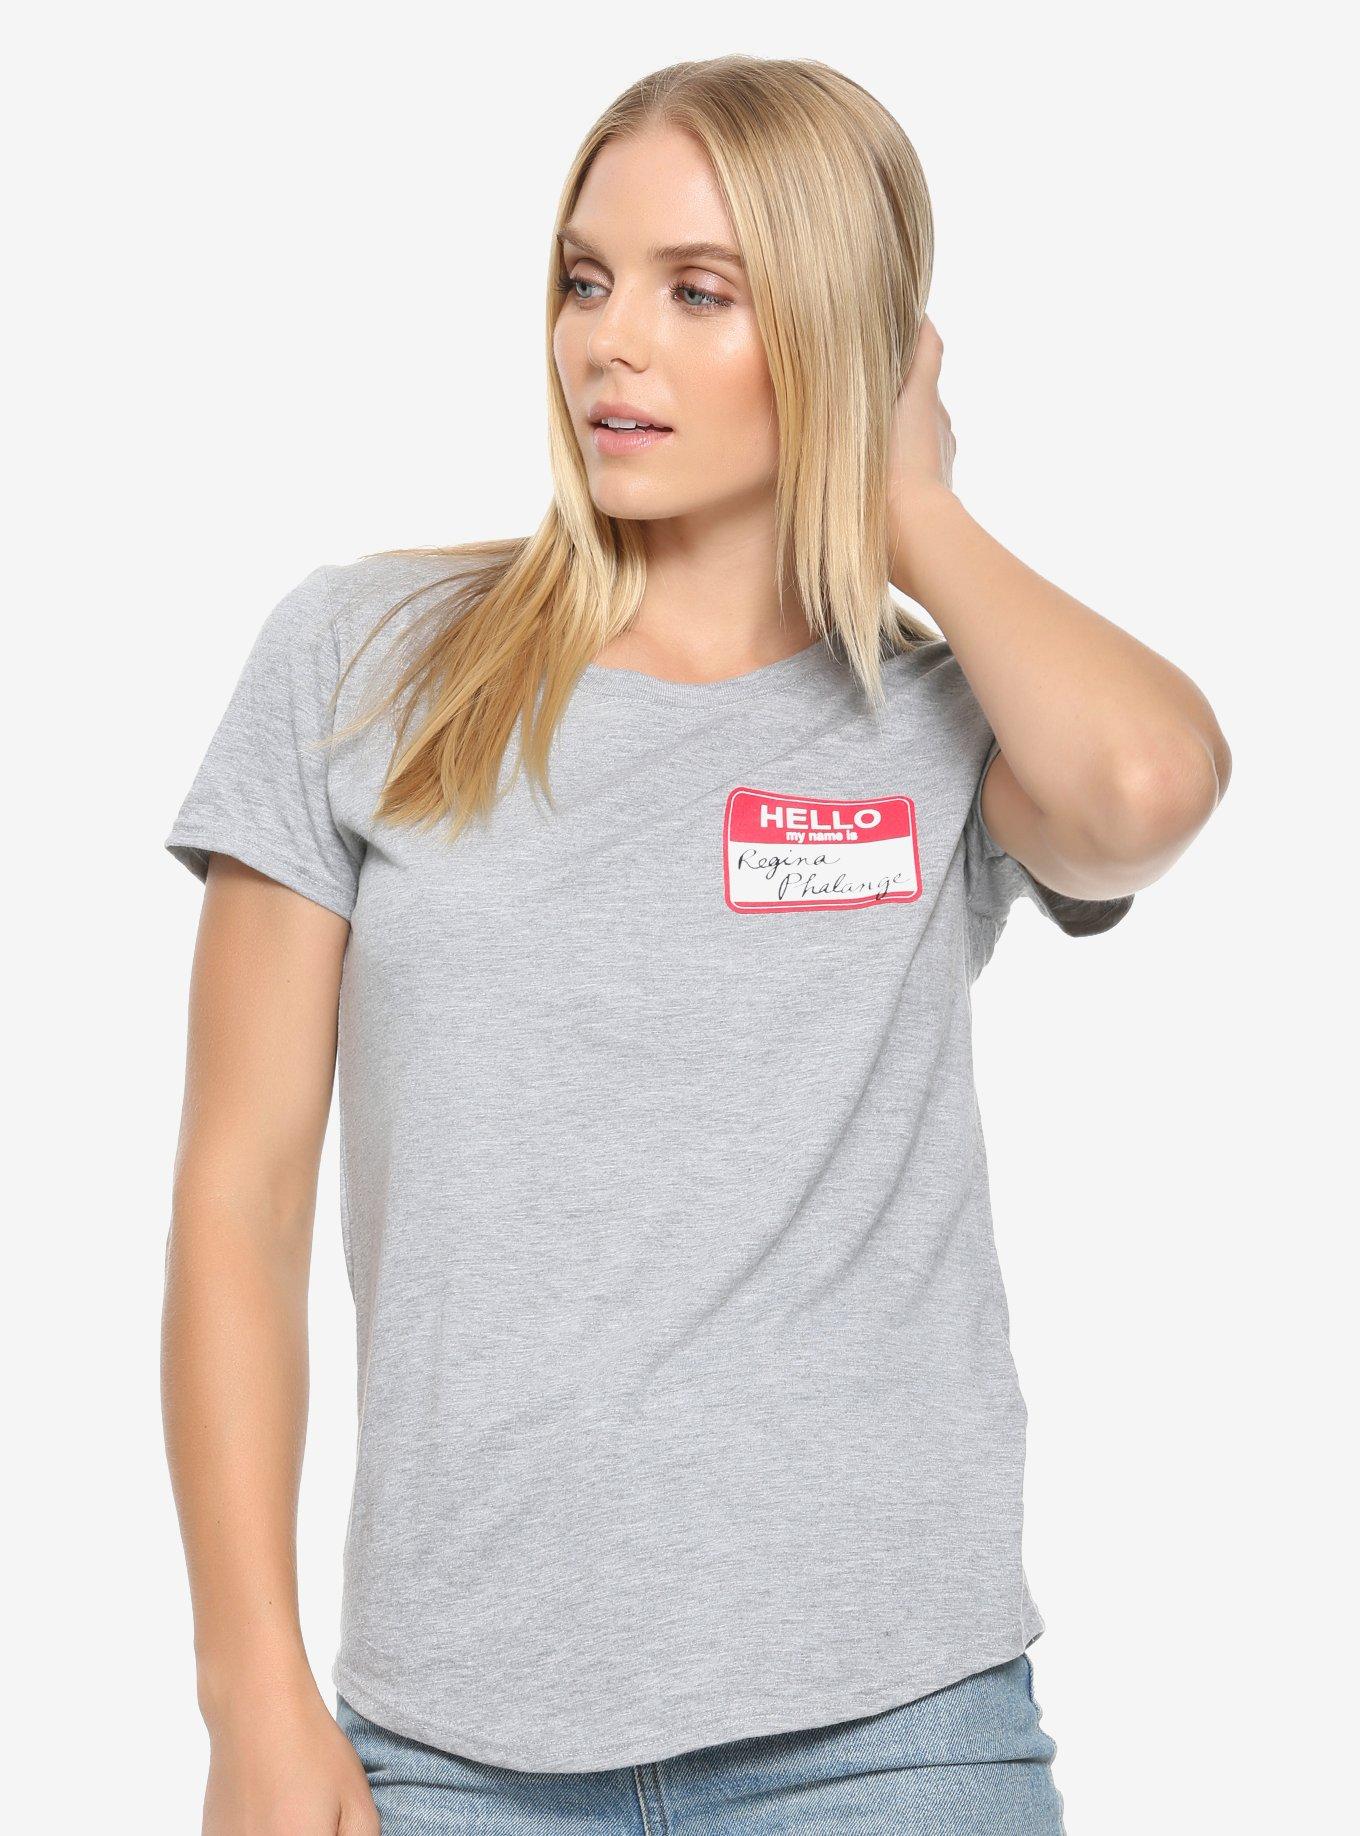 Friends Regina Phalange Womens T-Shirt - BoxLunch Exclusive, GREY, hi-res